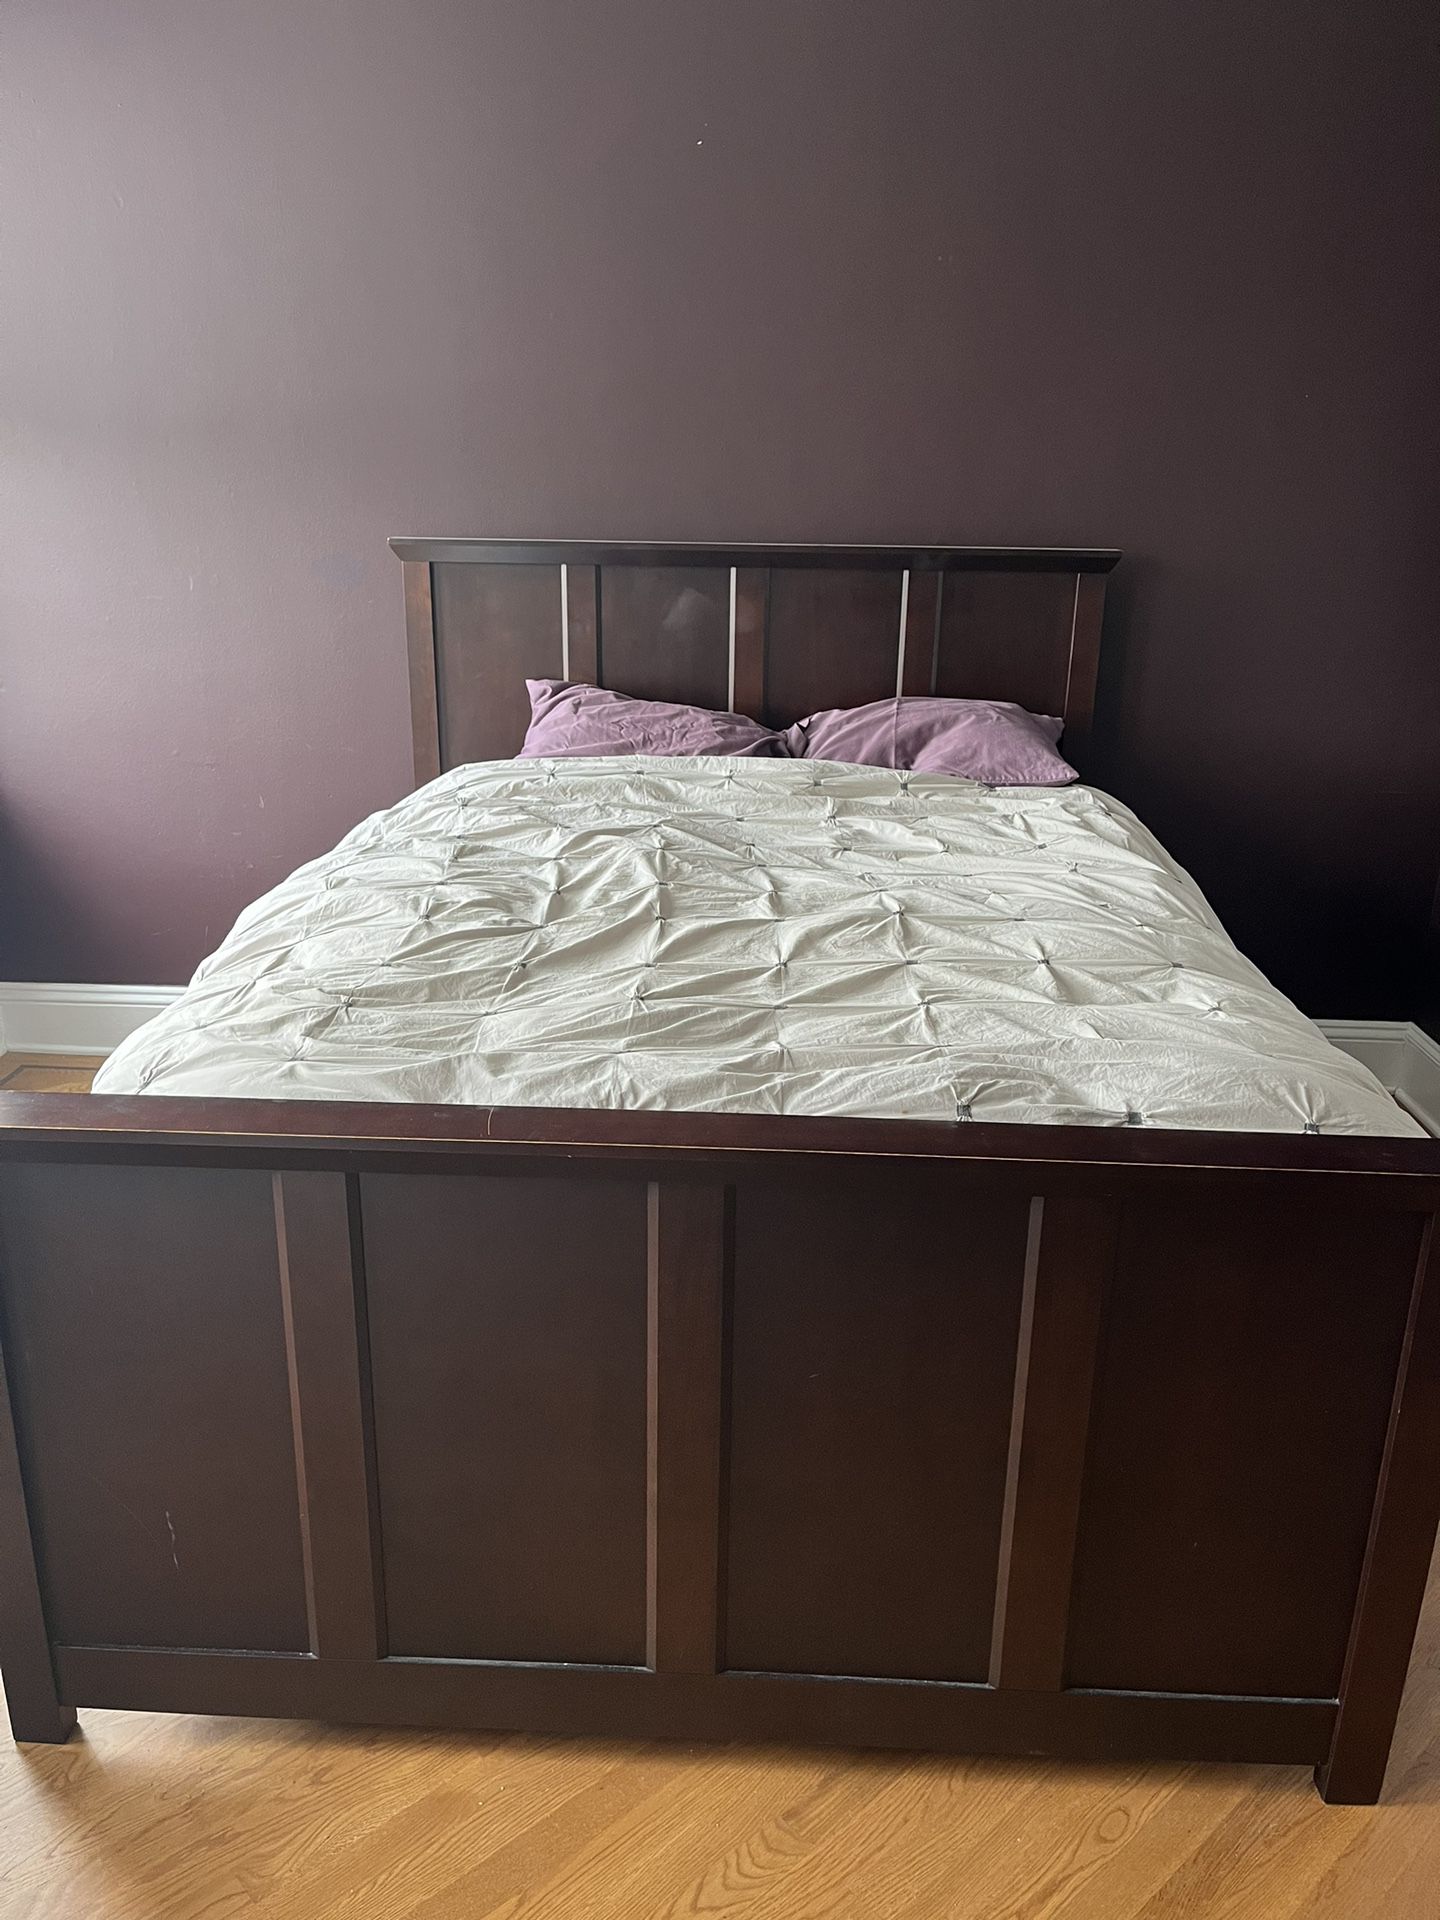 Matching Queen bed Frame, Headboard, footboard, And Dresser